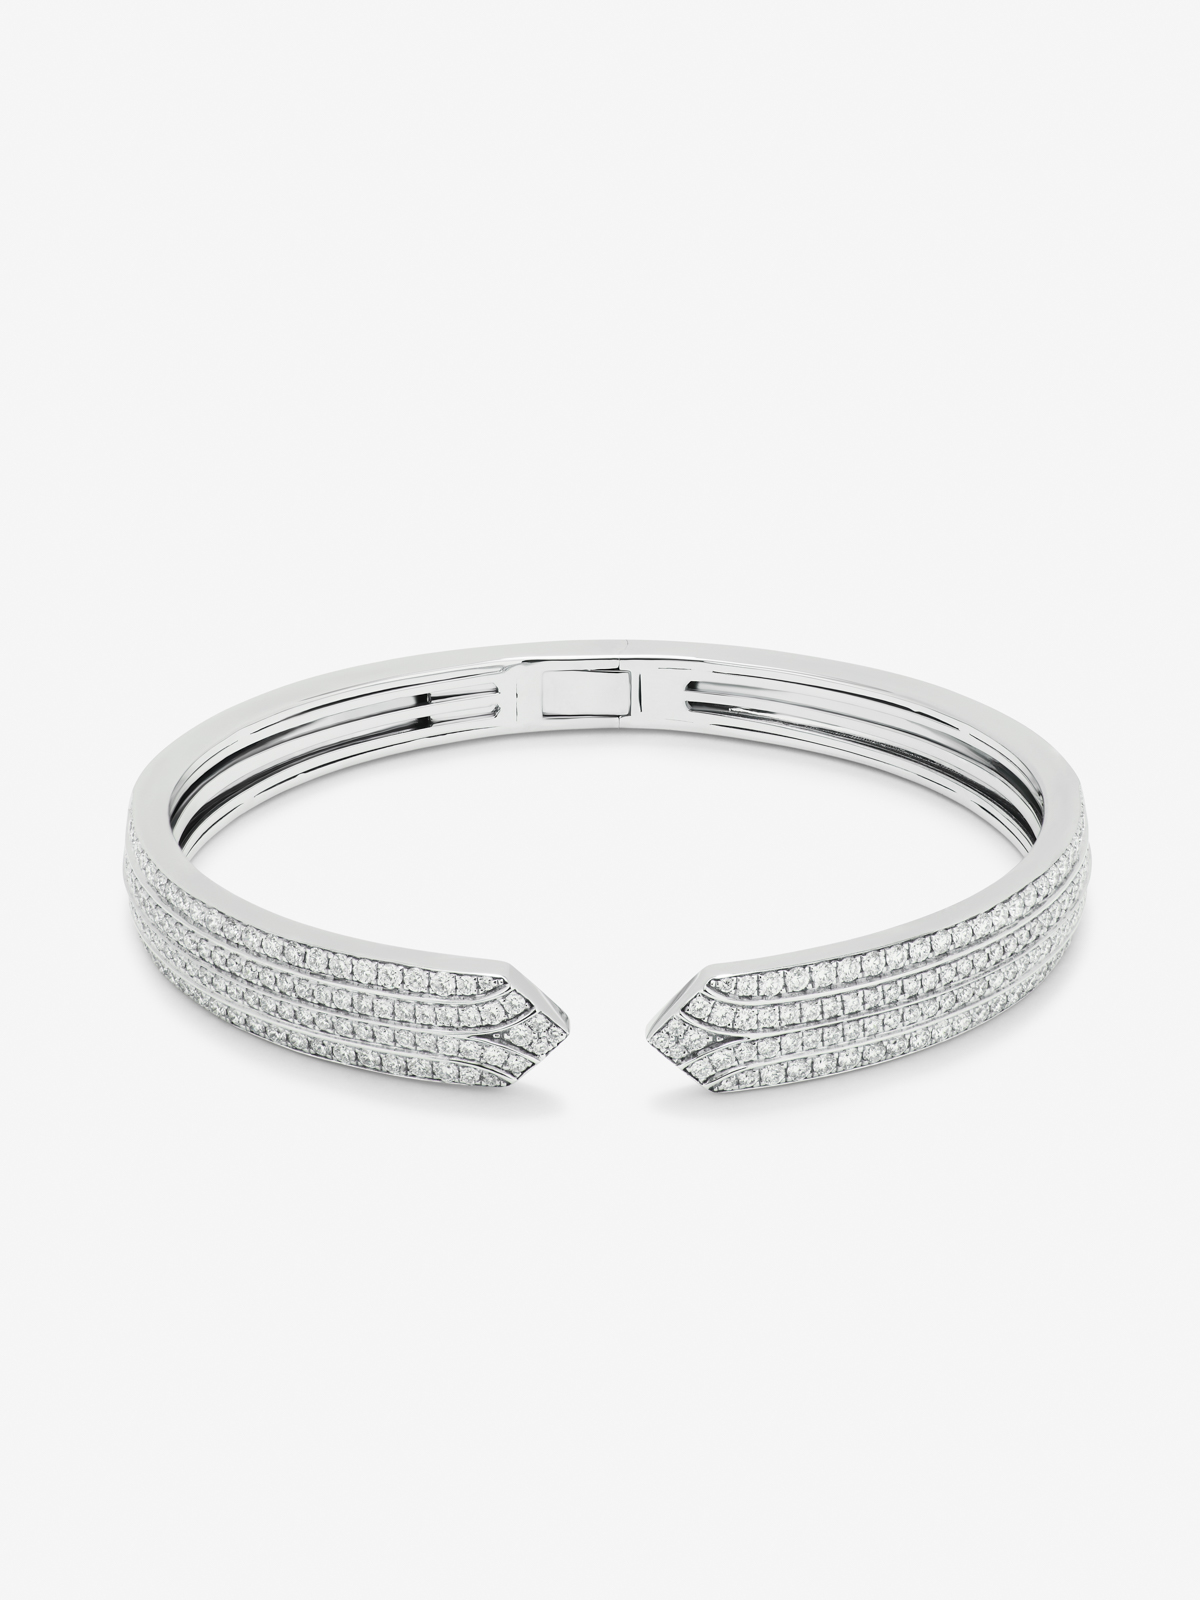 18K White Gold Open Cuff Bracelet with Diamond